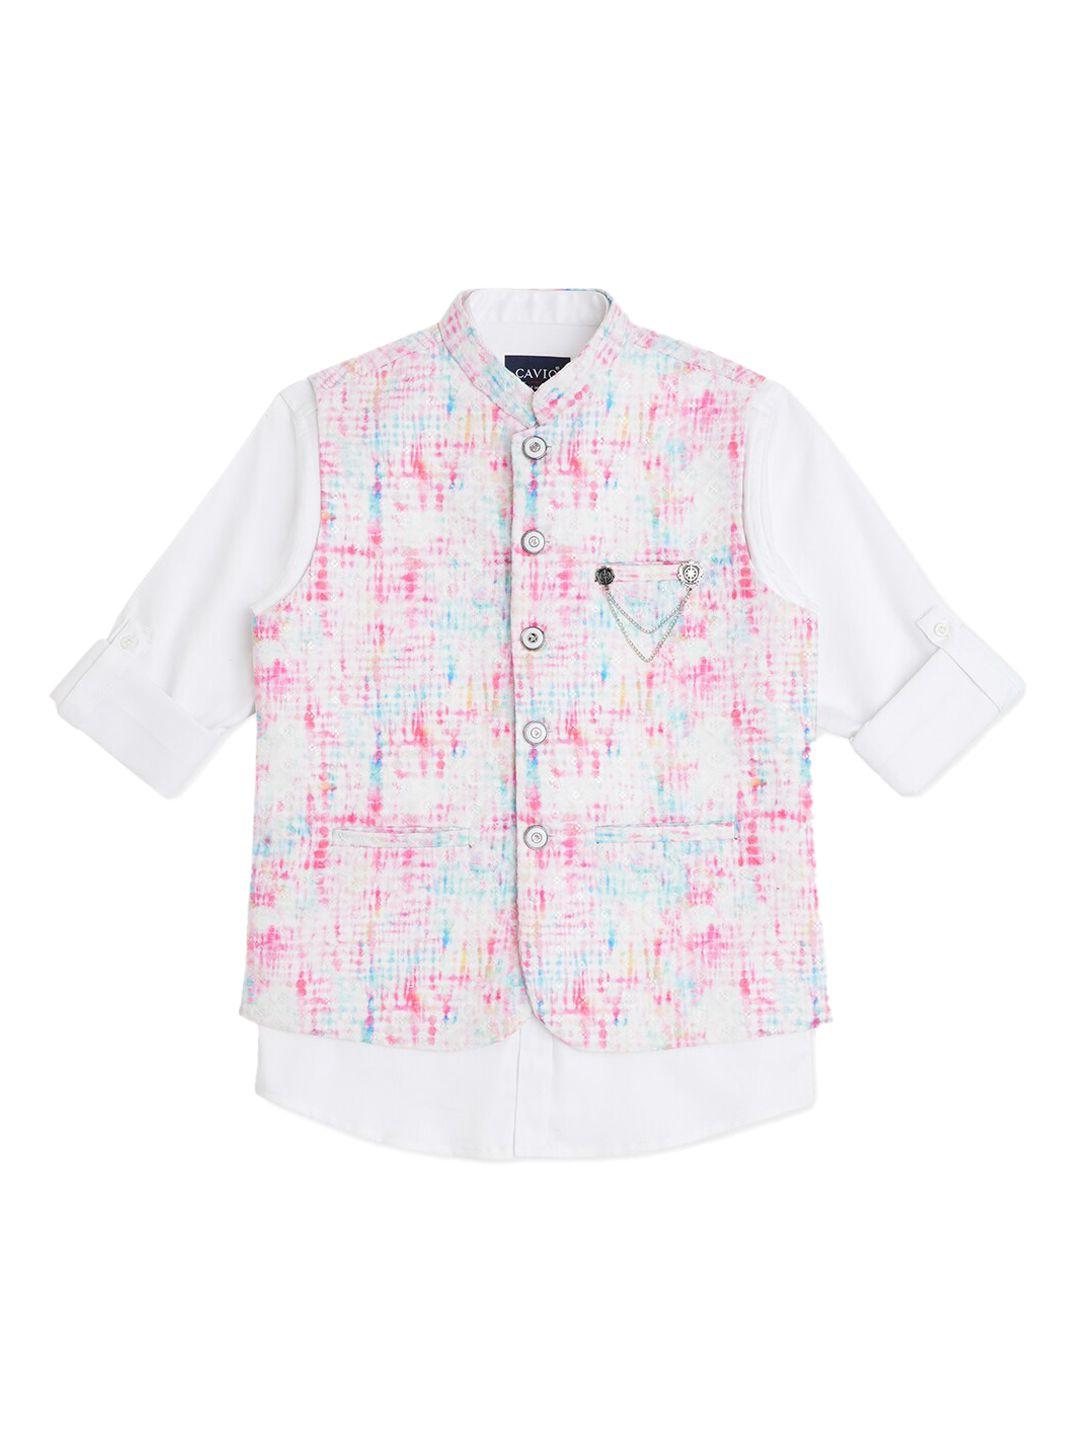 cavio-boys-embellished-cotton-nehru-jacket-with-shirt